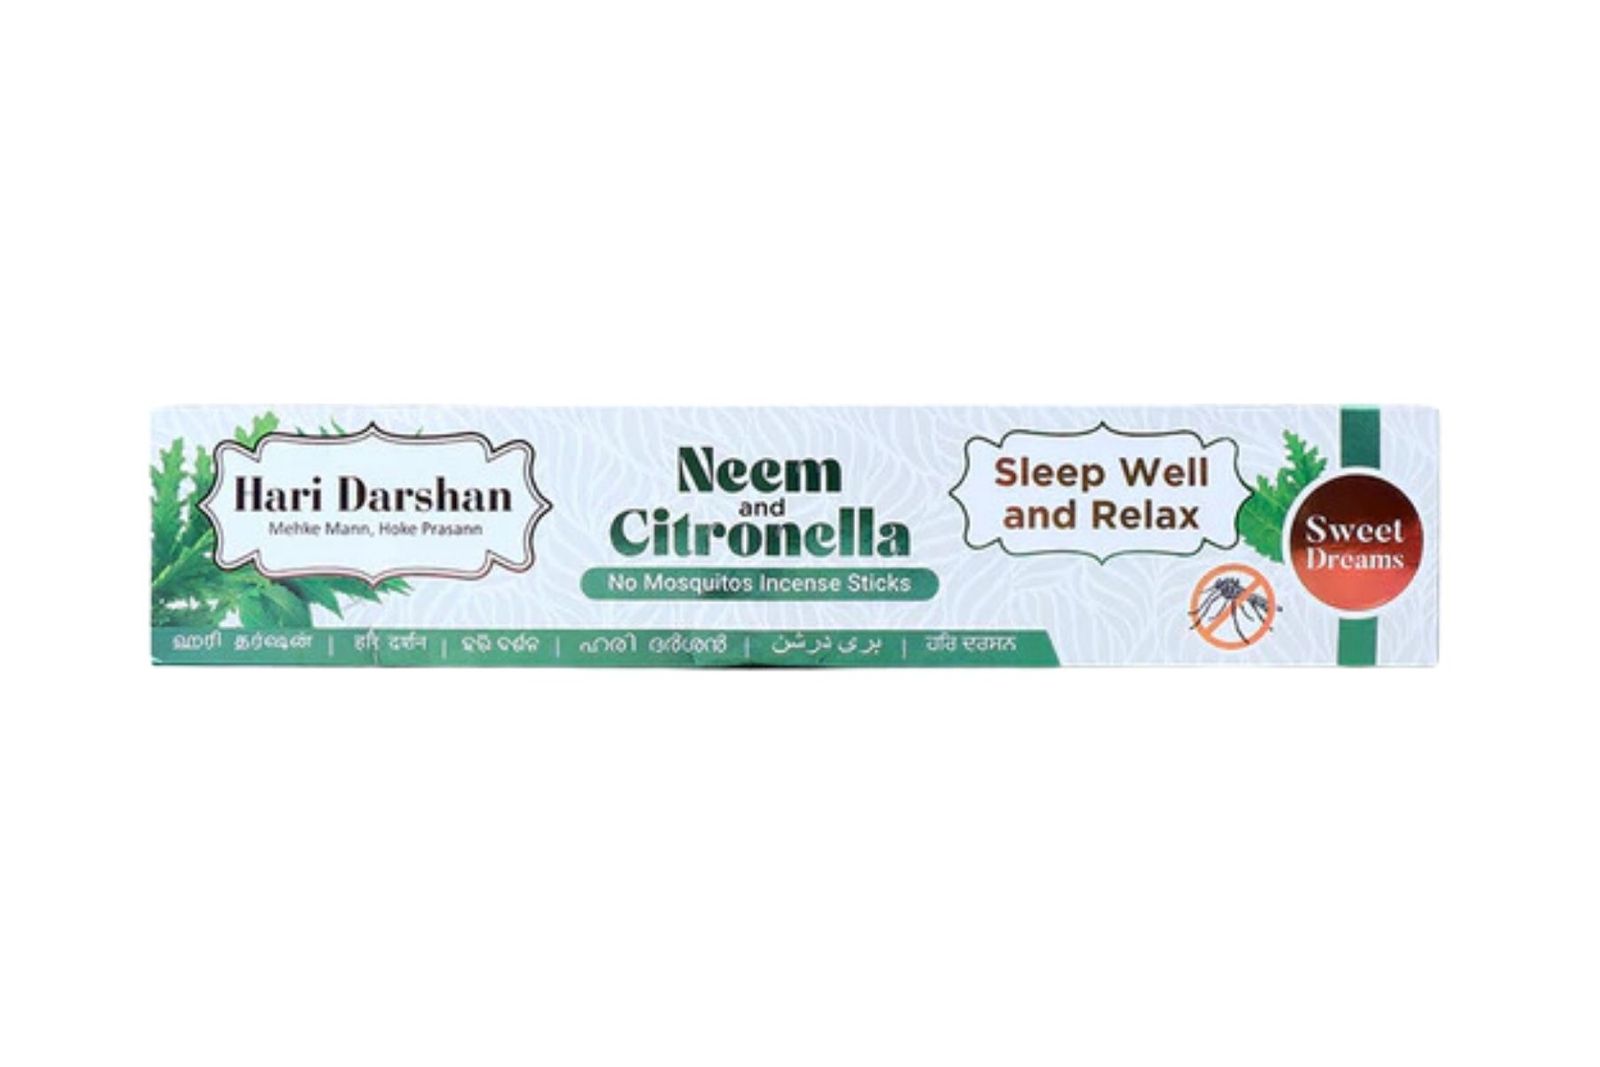 Hari Darshan Neem and Citronella No Mosquito Incense Sticks